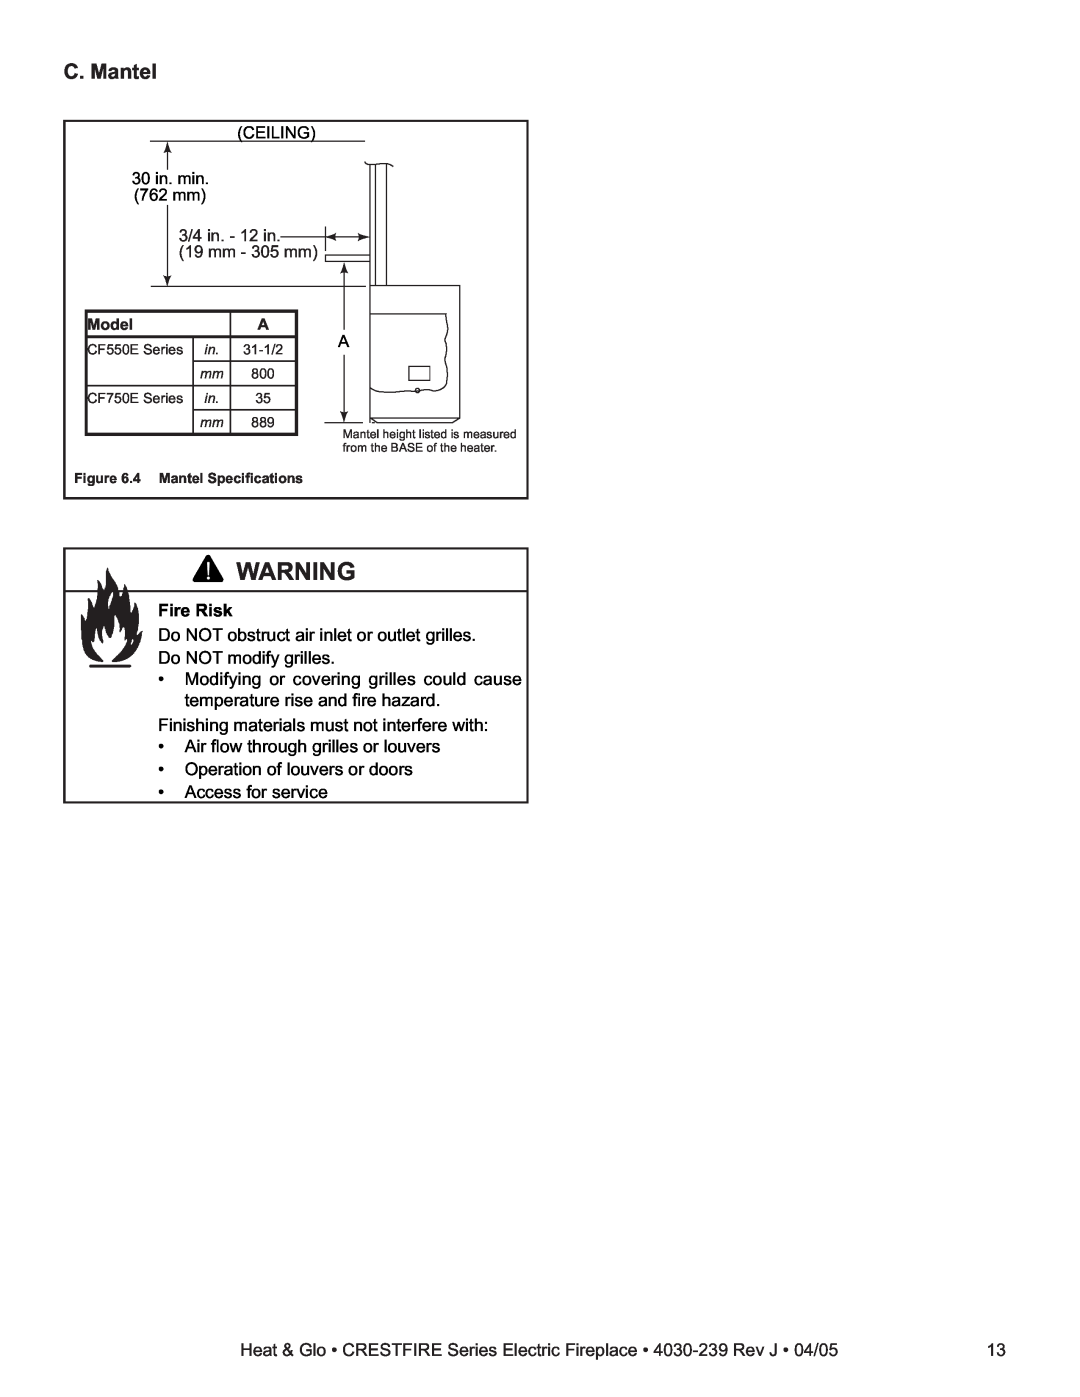 Heat & Glo LifeStyle CF550ENH, CF750EV, CF550EV, CF750ENH owner manual C. Mantel, Fire Risk 